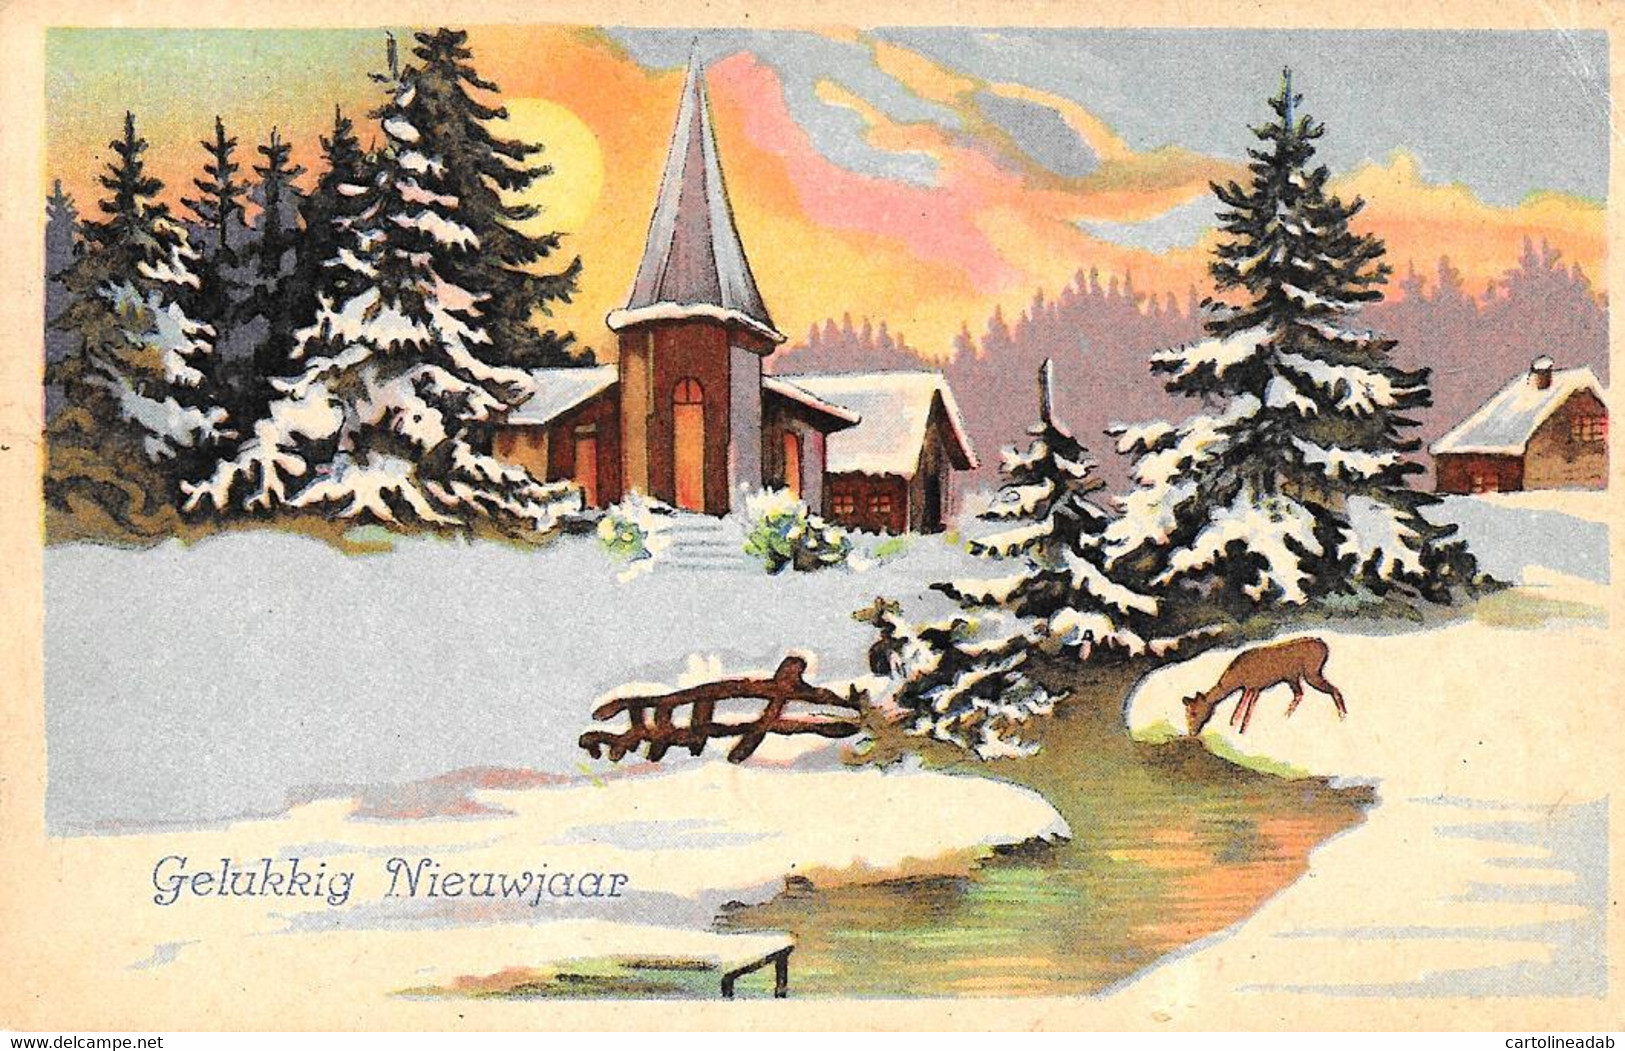 [DC12858] CPA - AUGURALE - GELUKKING NIEUWJAAR - BUON ANNO - PERFETTA - Viaggiata 1945 - Old Postcard - New Year